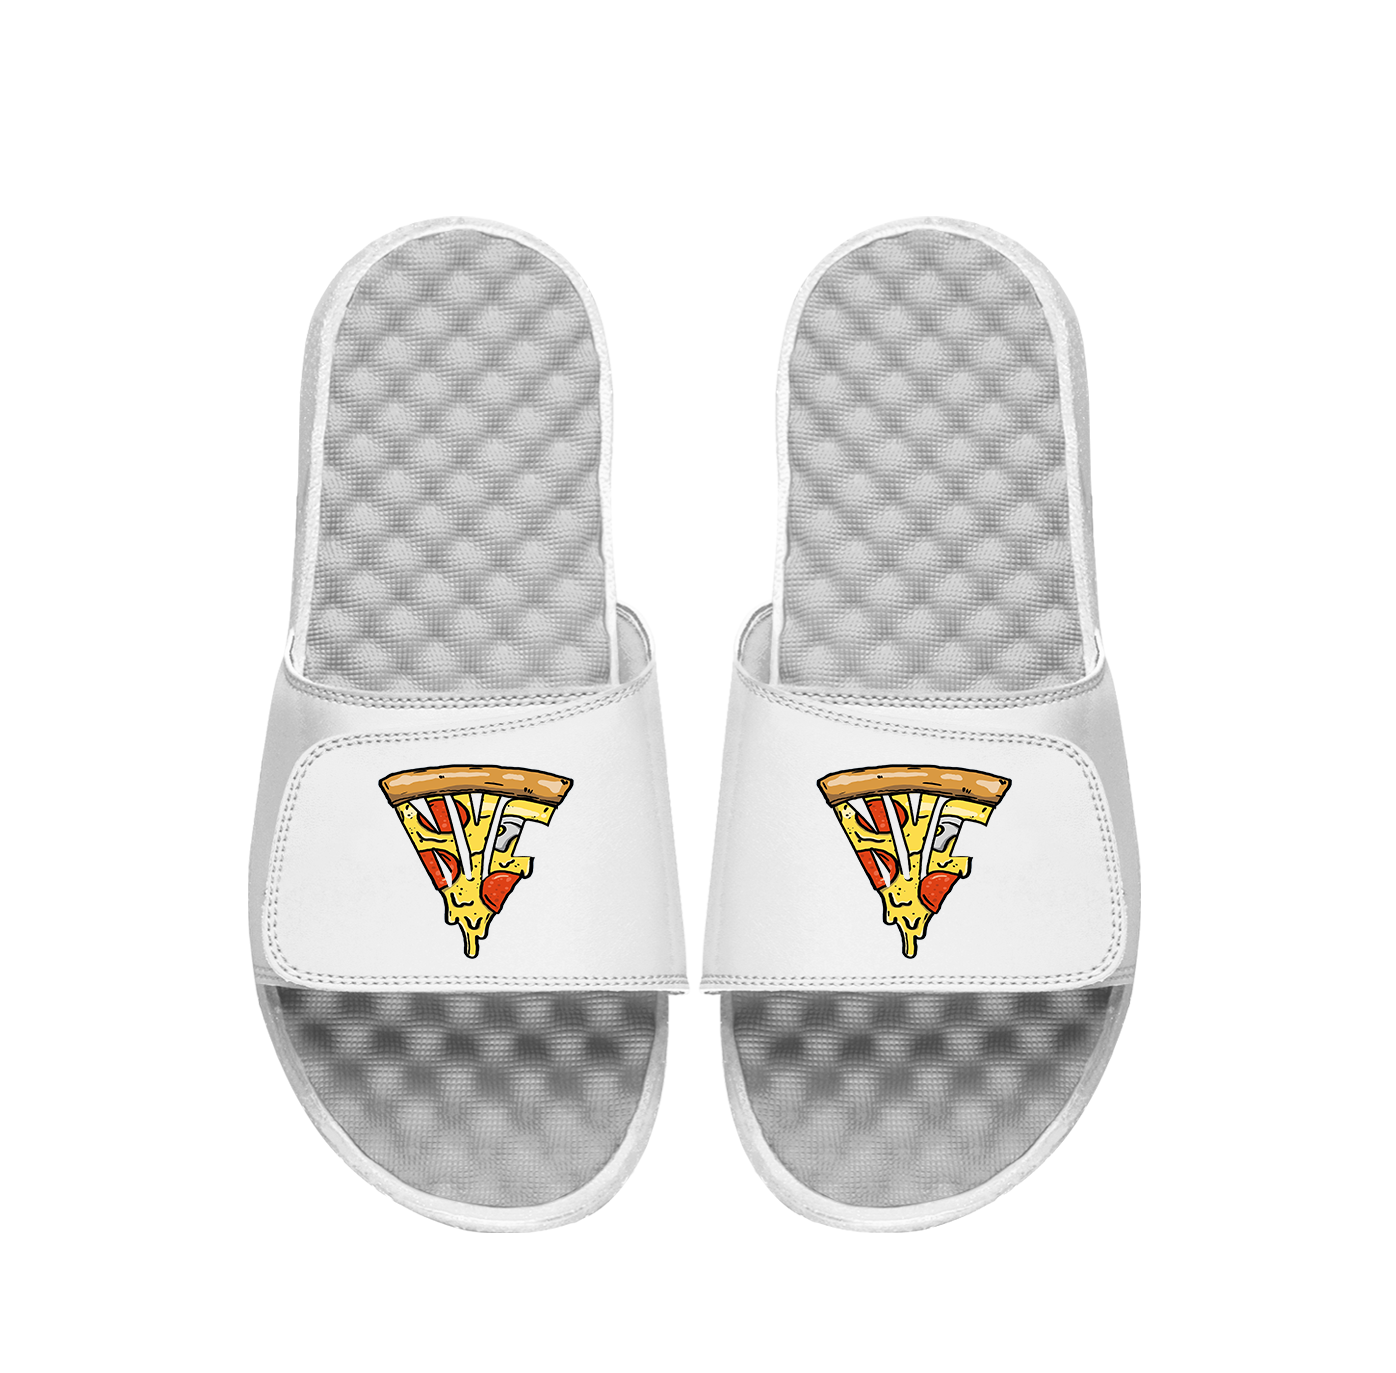 NYC Pizza Slides